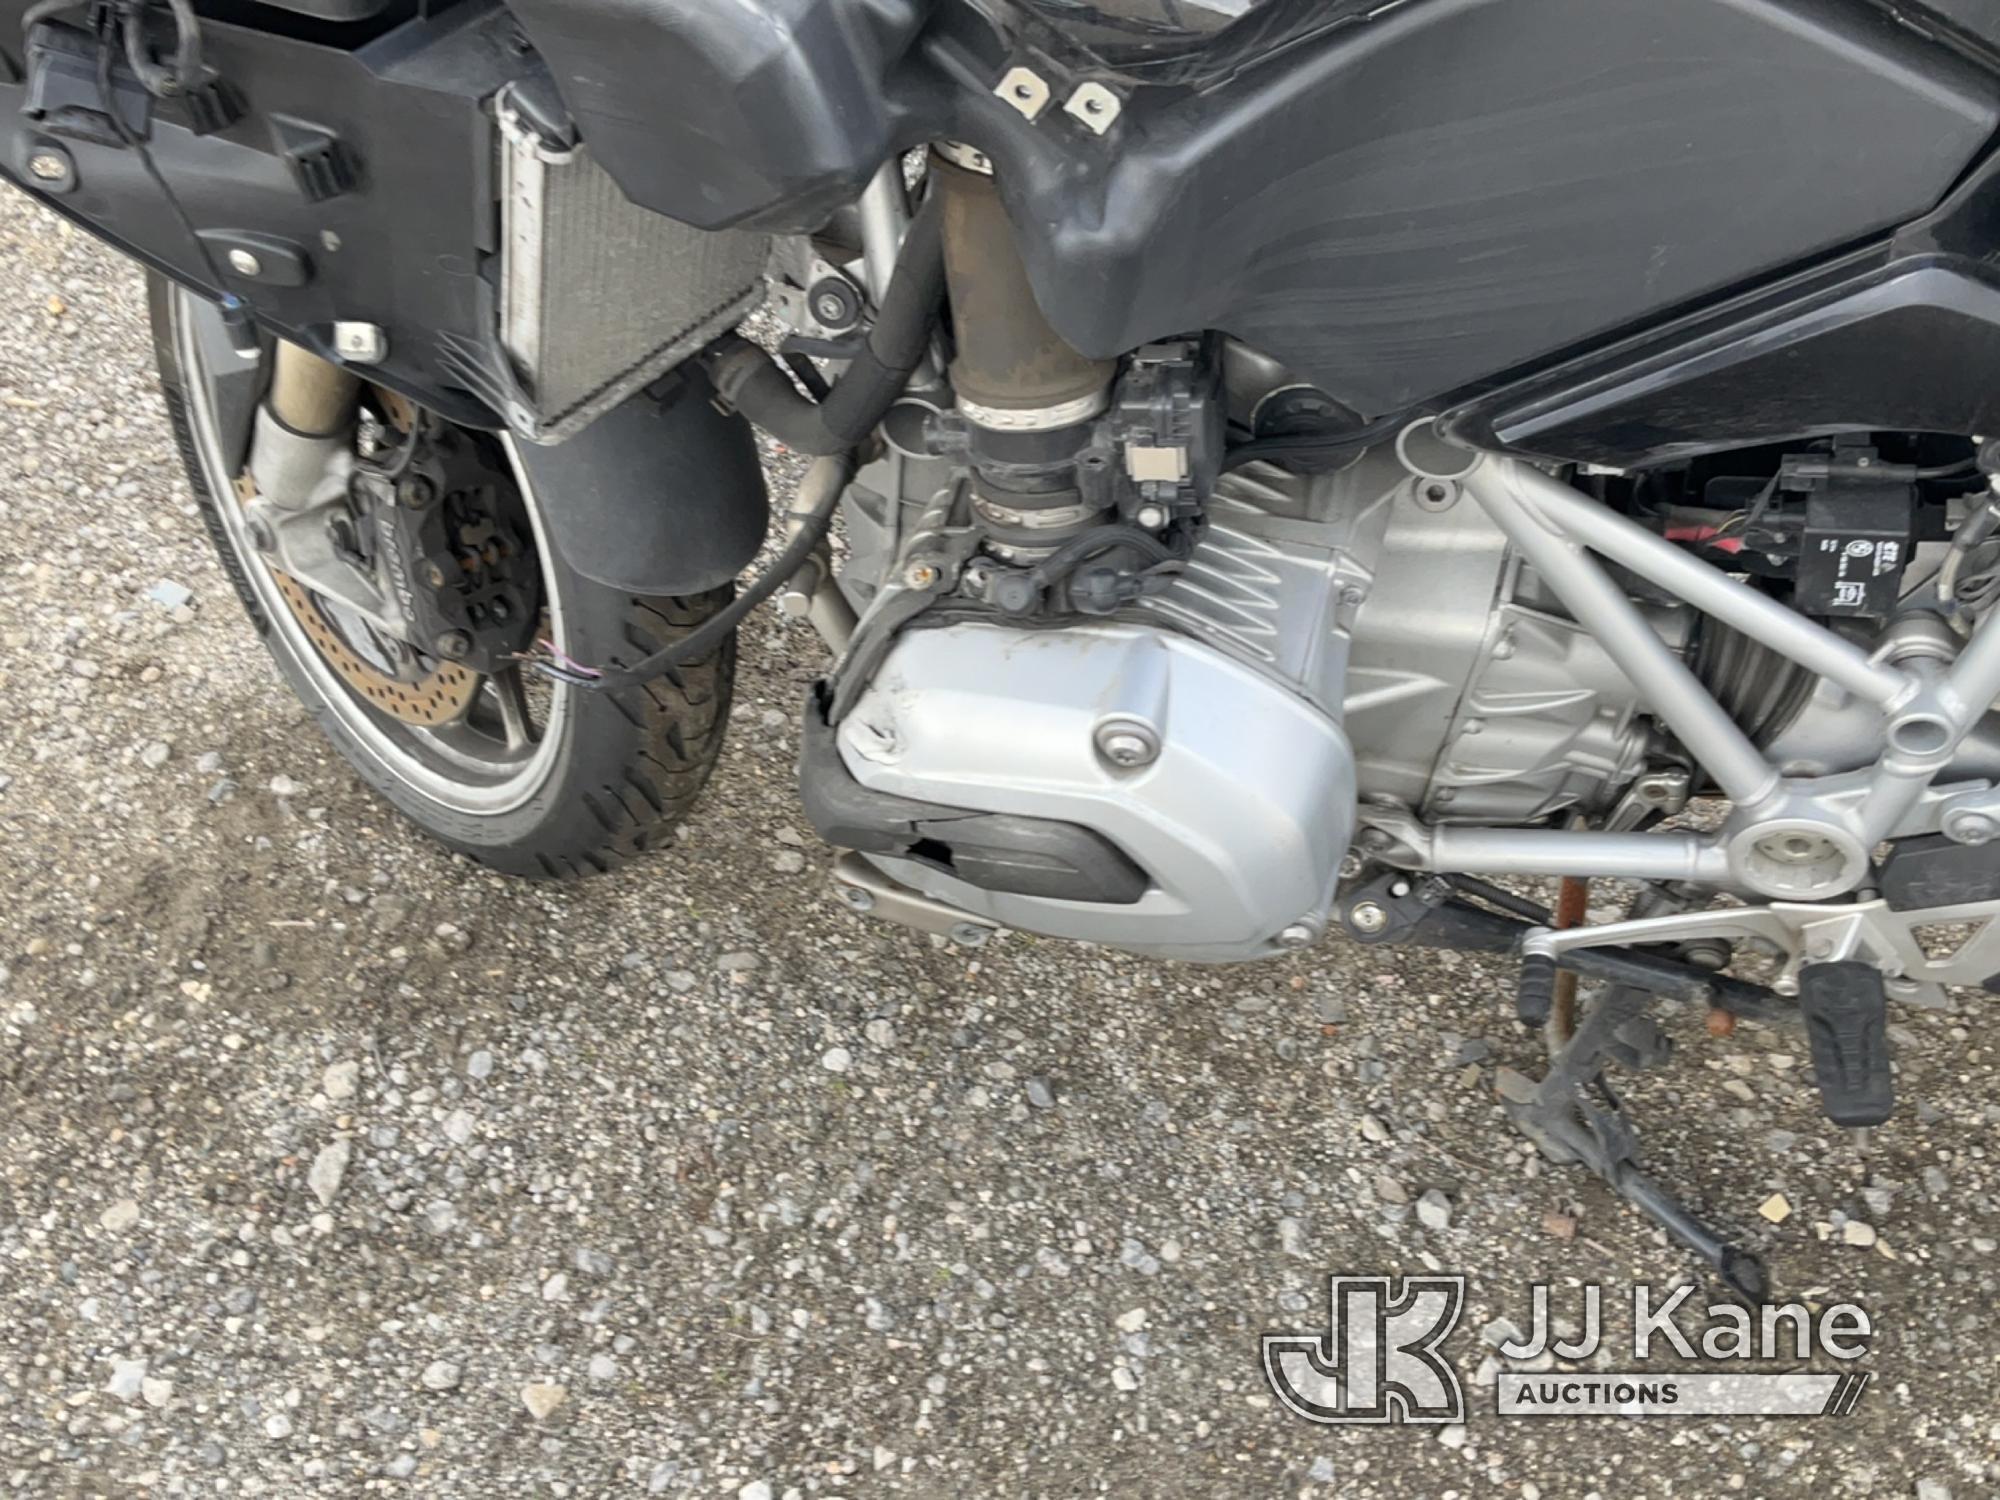 (Jurupa Valley, CA) 2016 BMW R1200RT Motorcycle Not Running, No Key , Stripped Of Parts